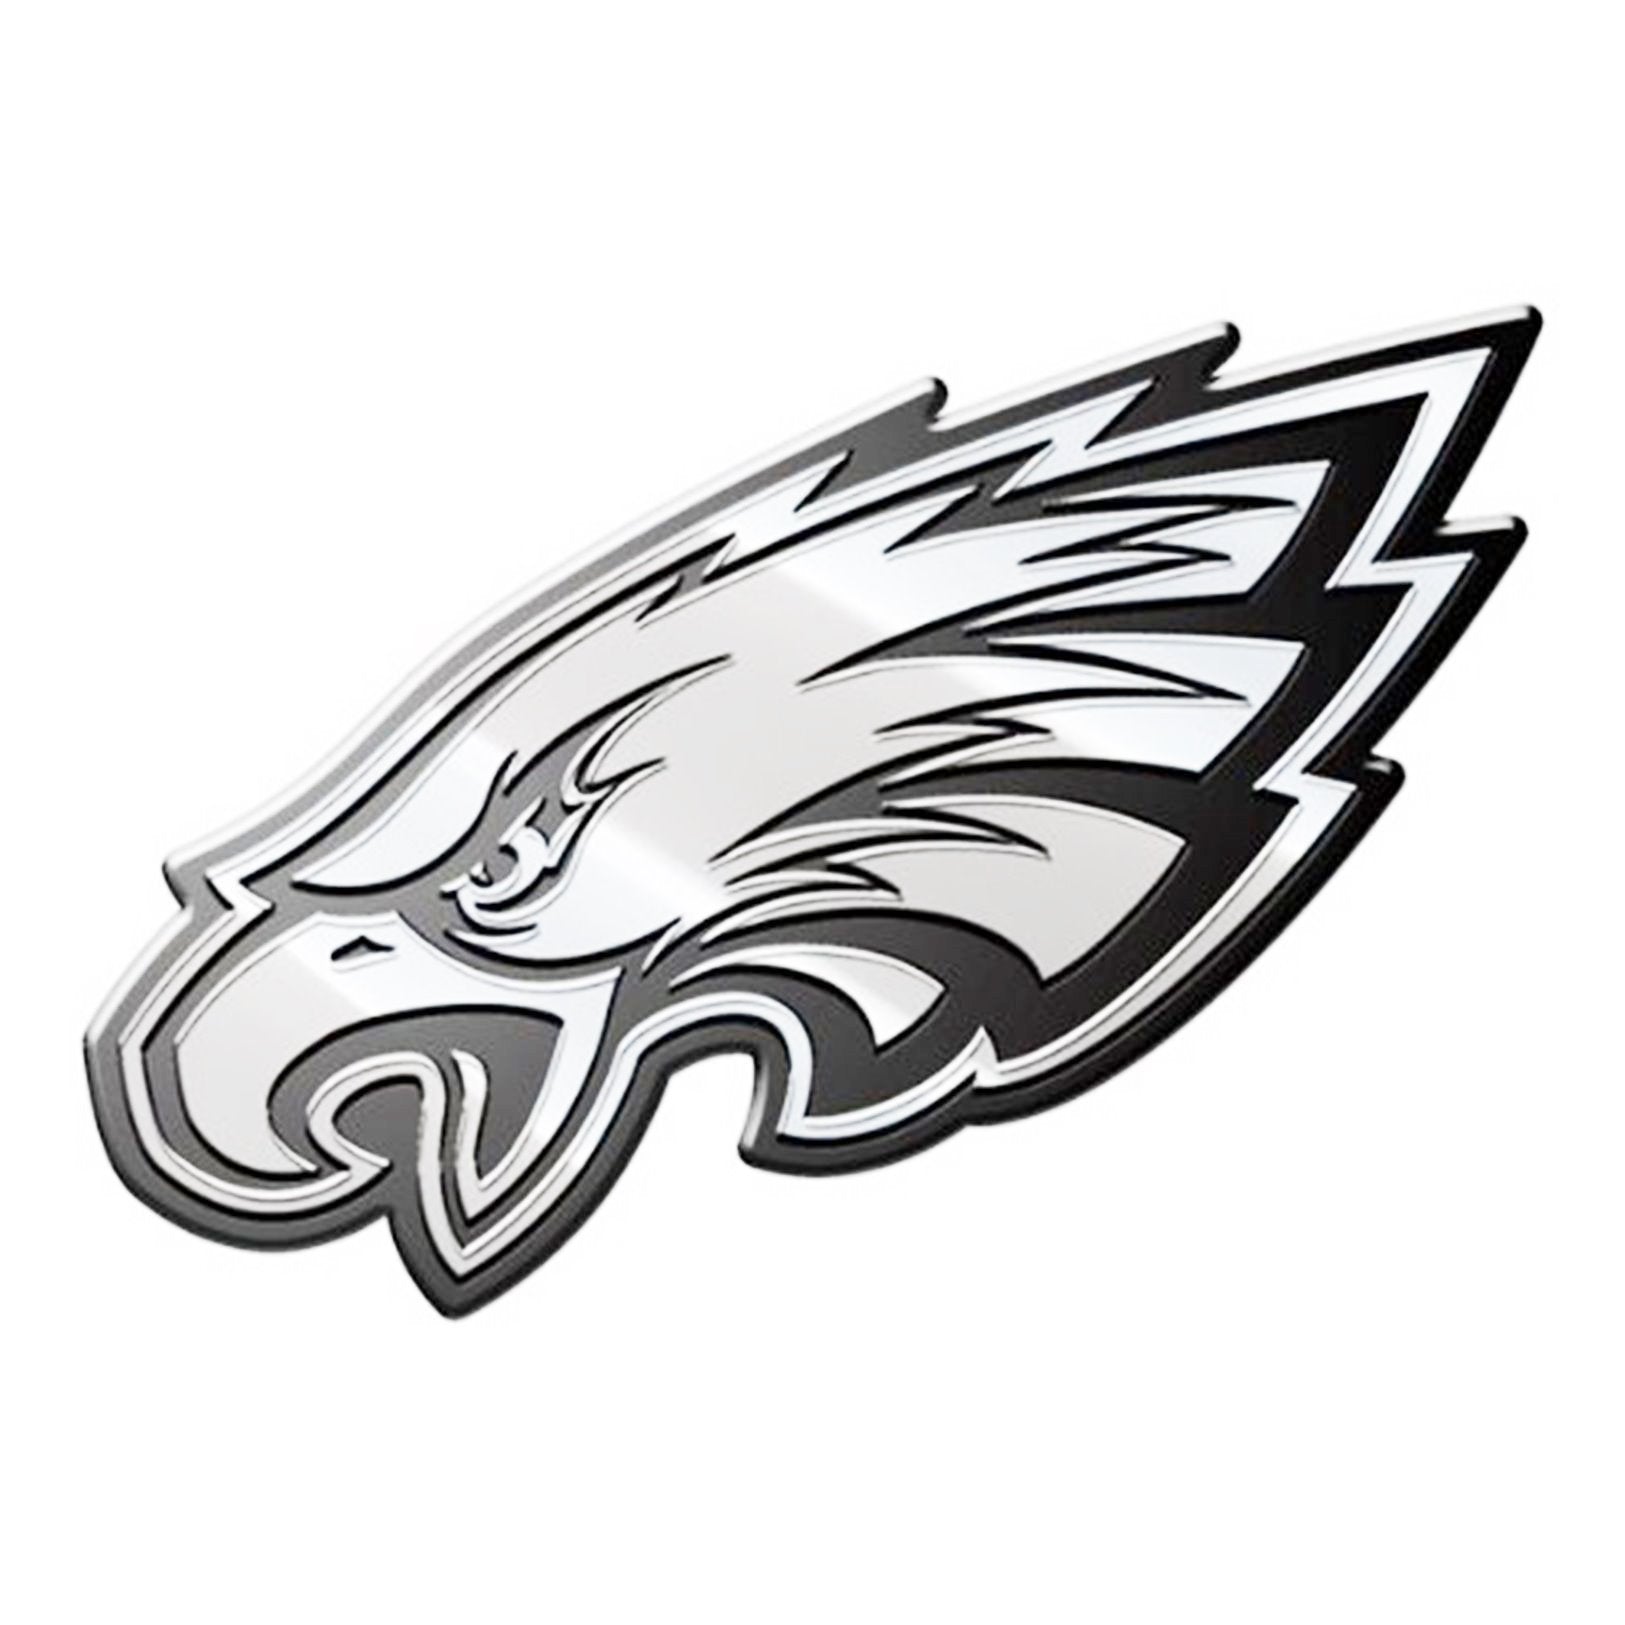 Philadelphia Eagles Auto Emblem, Silver Chrome Color, Raised Molded Plastic, Adhesive Tape Backing